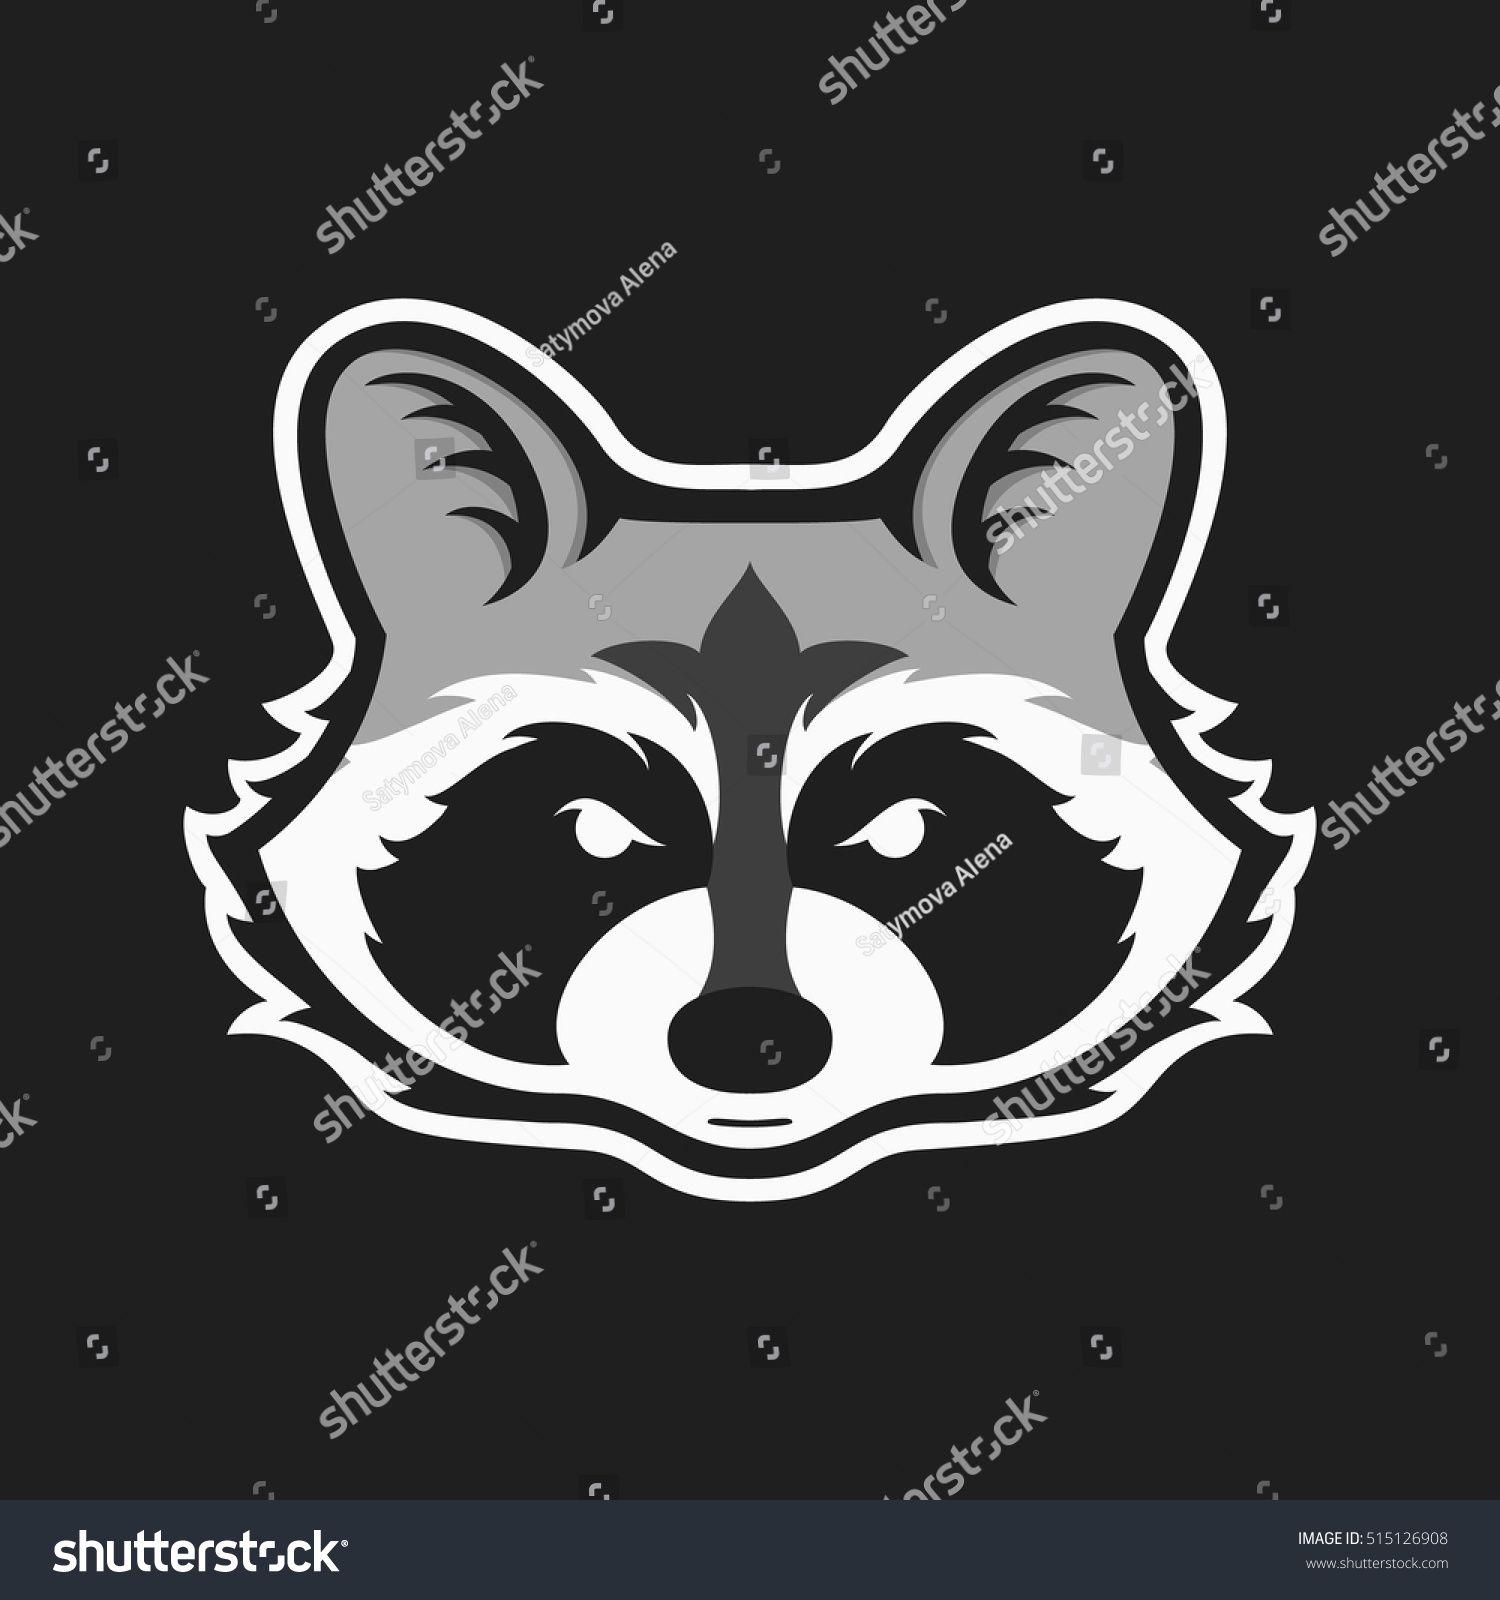 Raccoon Sports Logo - Raccoons head logo for sport club or team. Animal mascot logotype